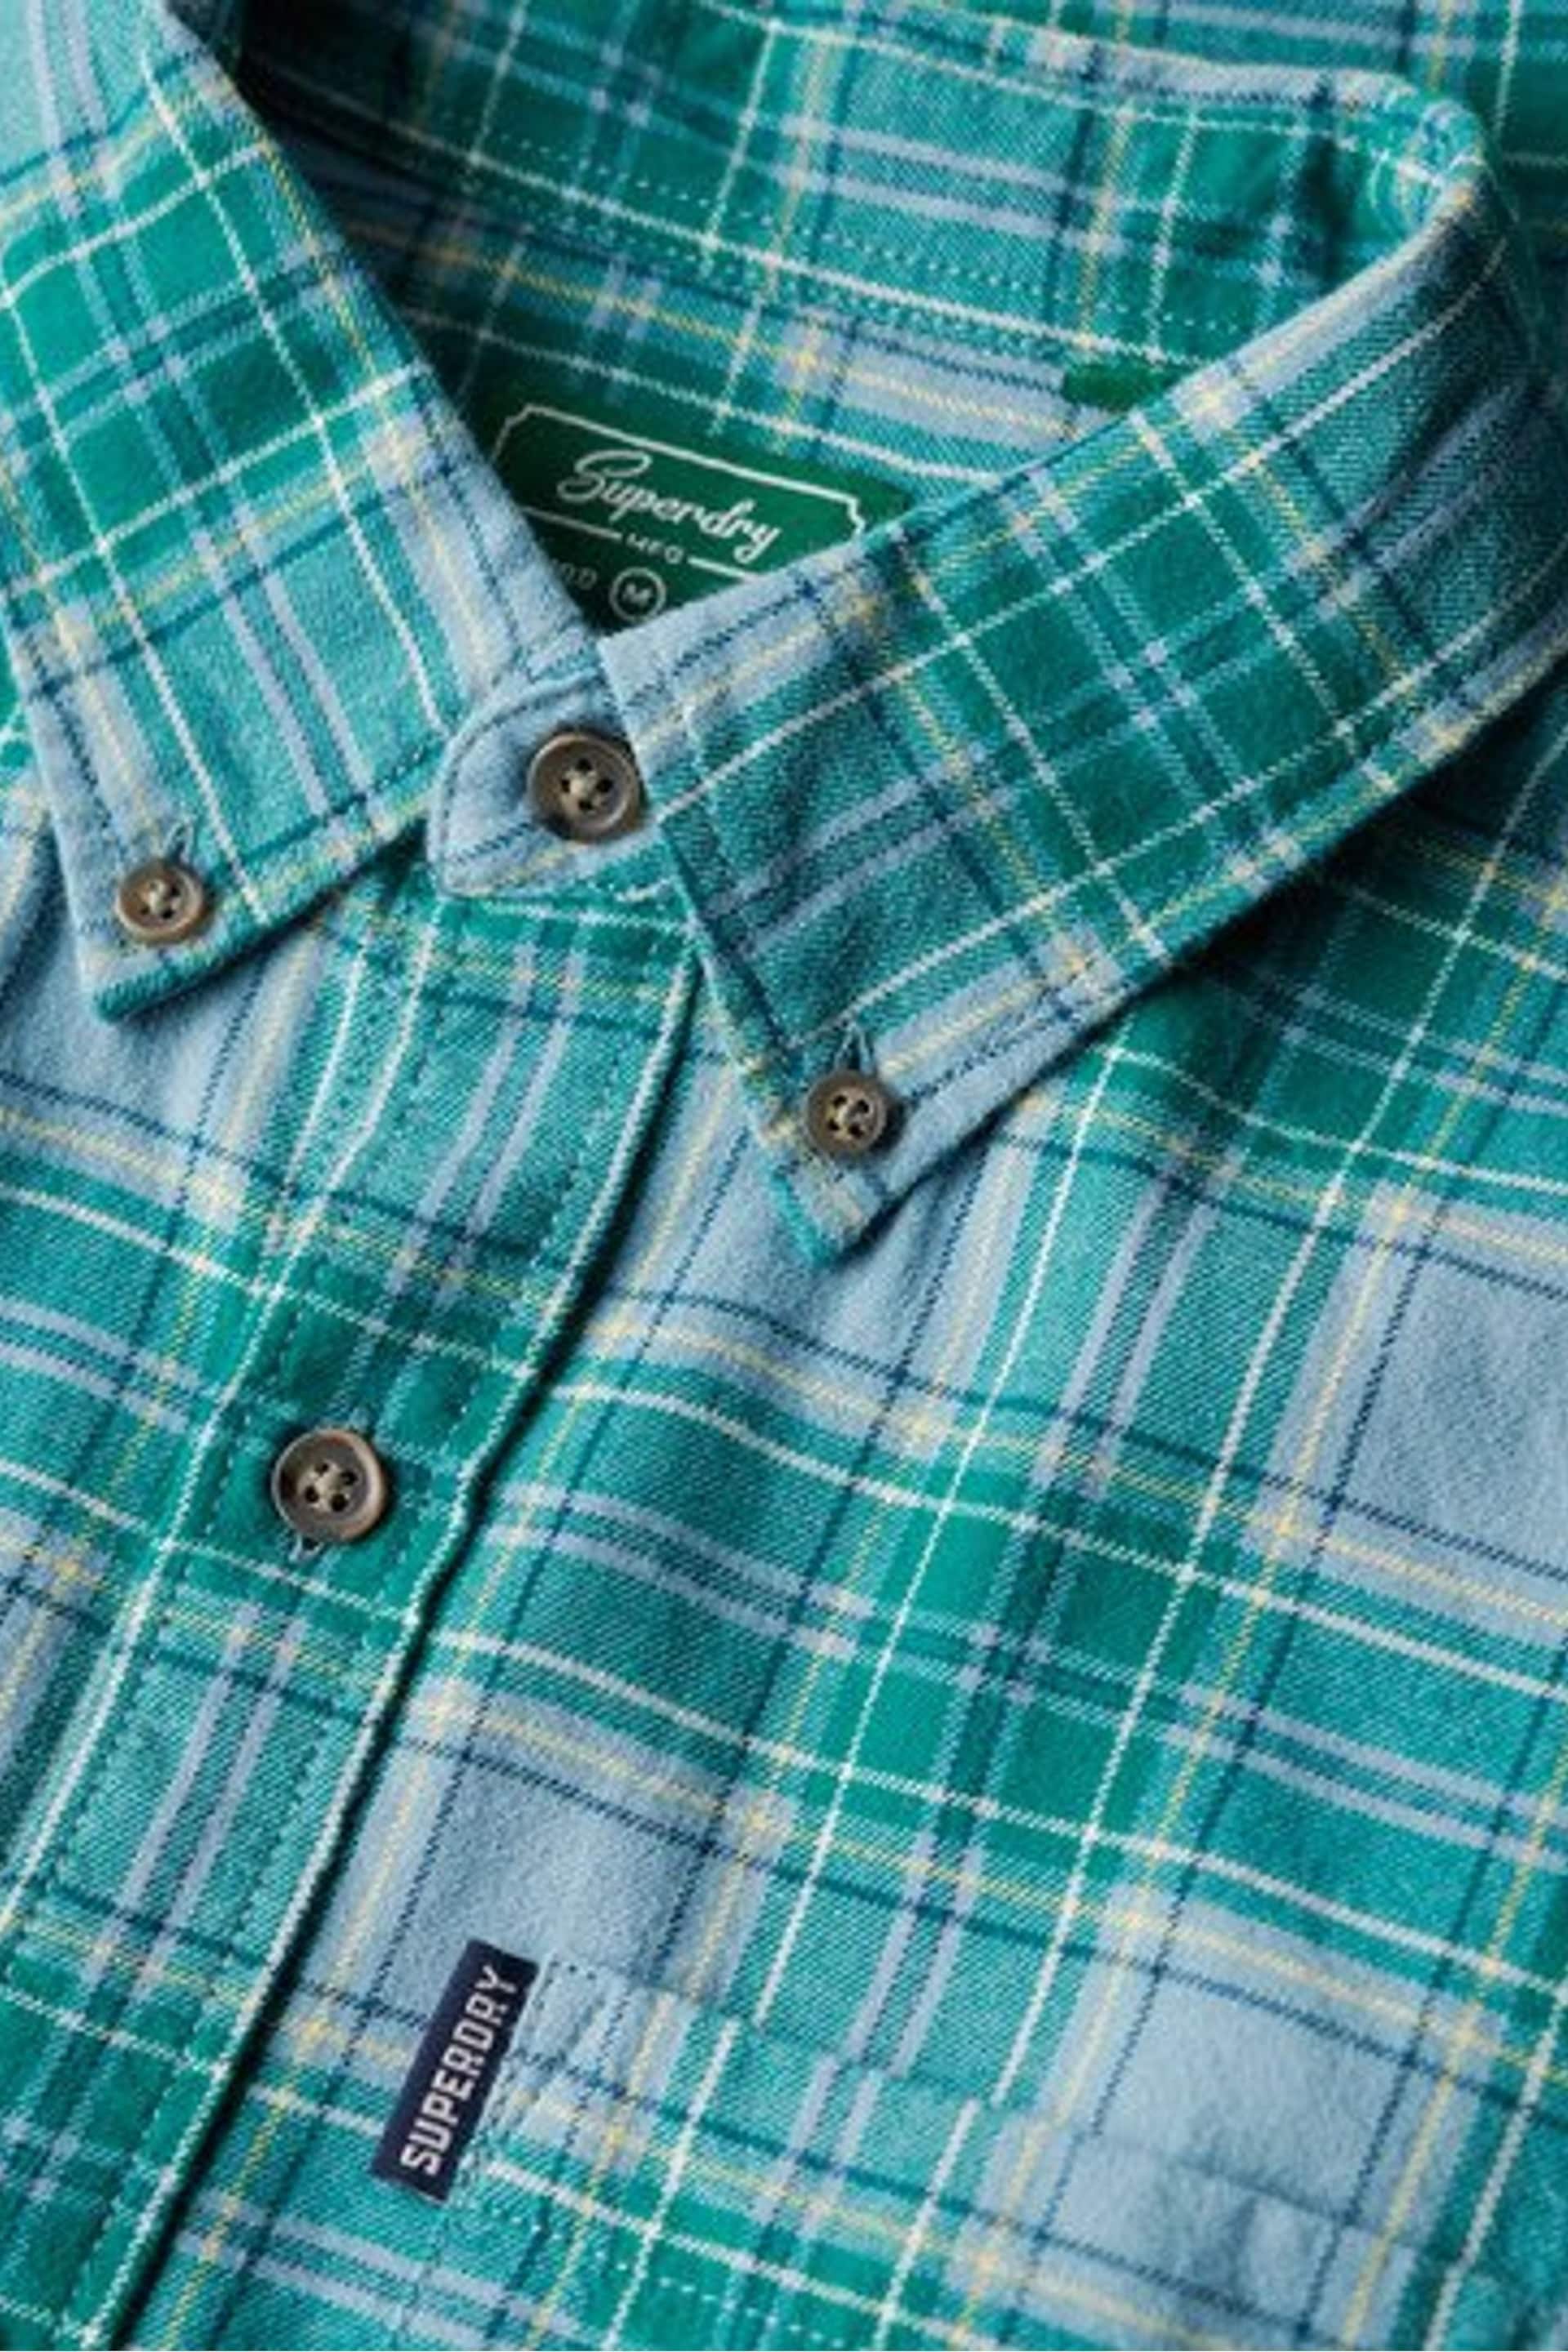 Superdry Blue Vintage Check Shirt - Image 1 of 6